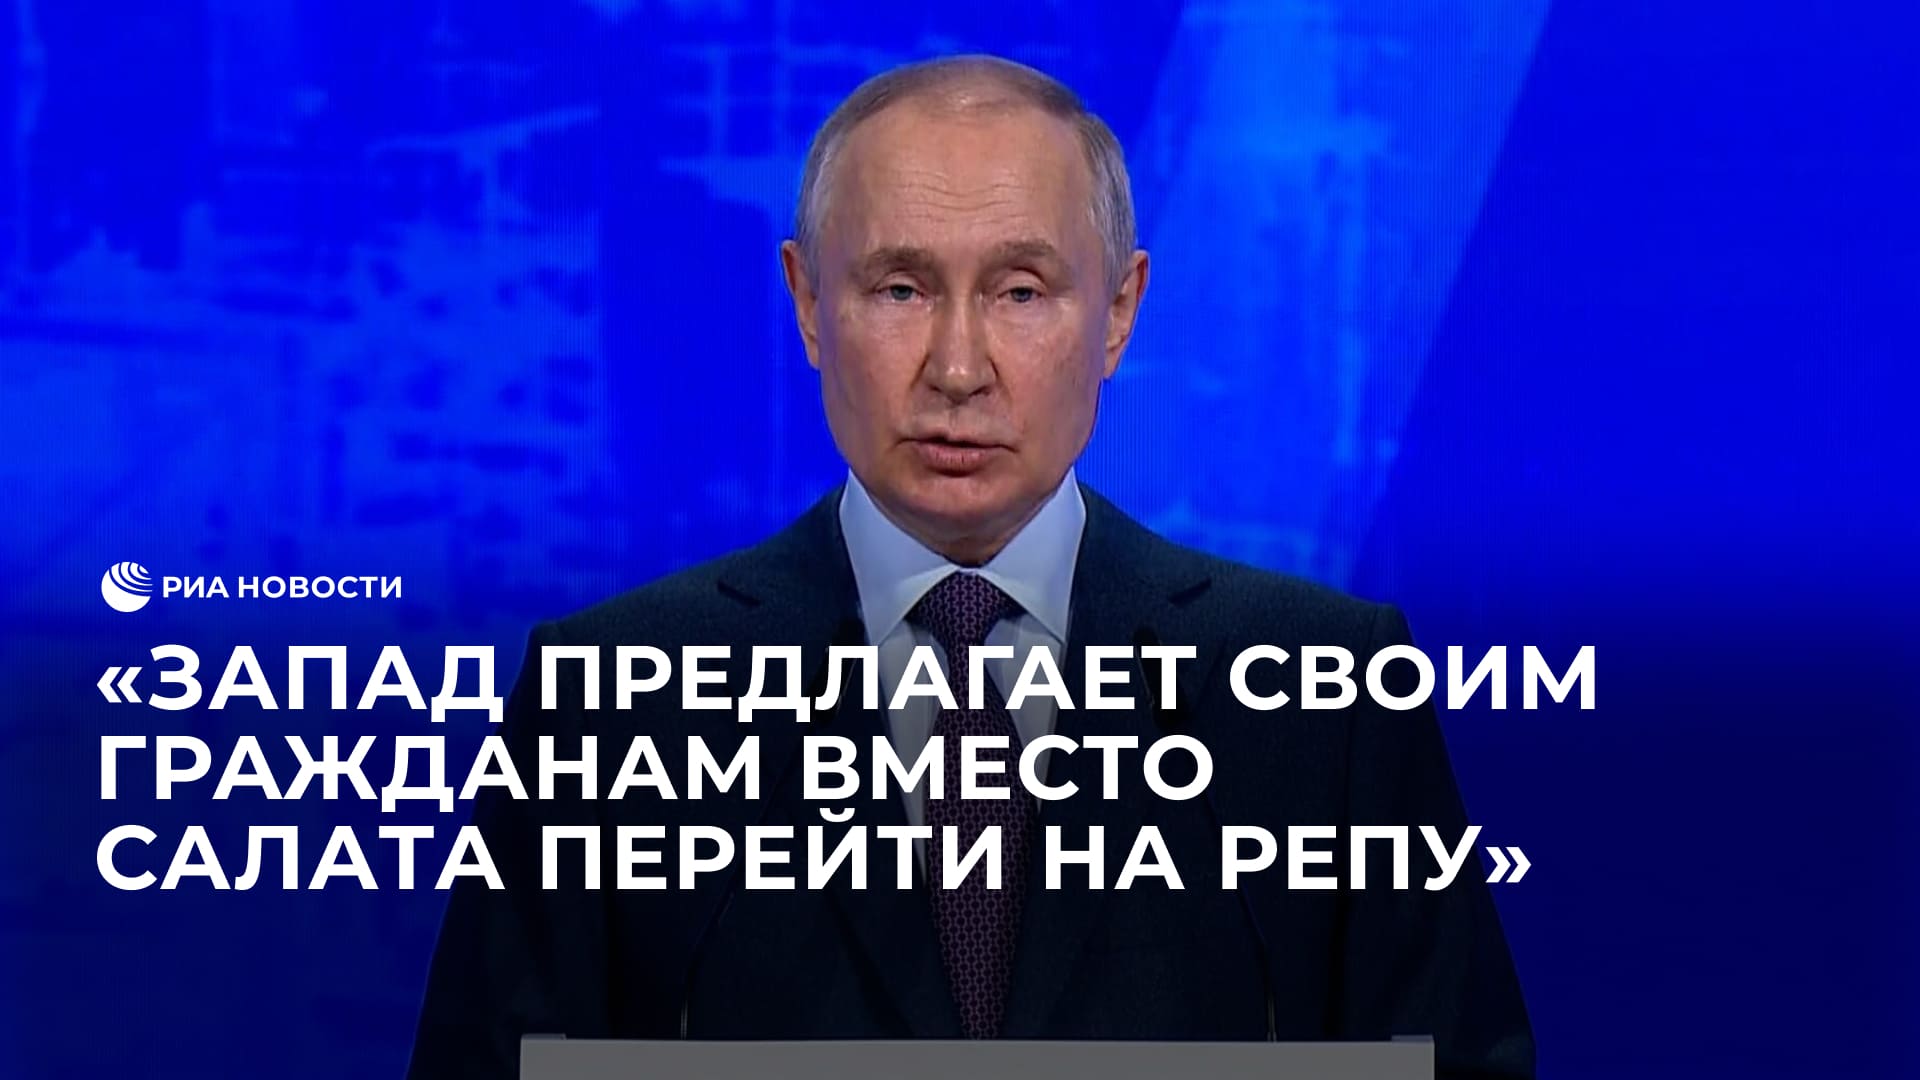 Запад предлагает своим гражданам вместо салата перейти на репу, заявил Путин